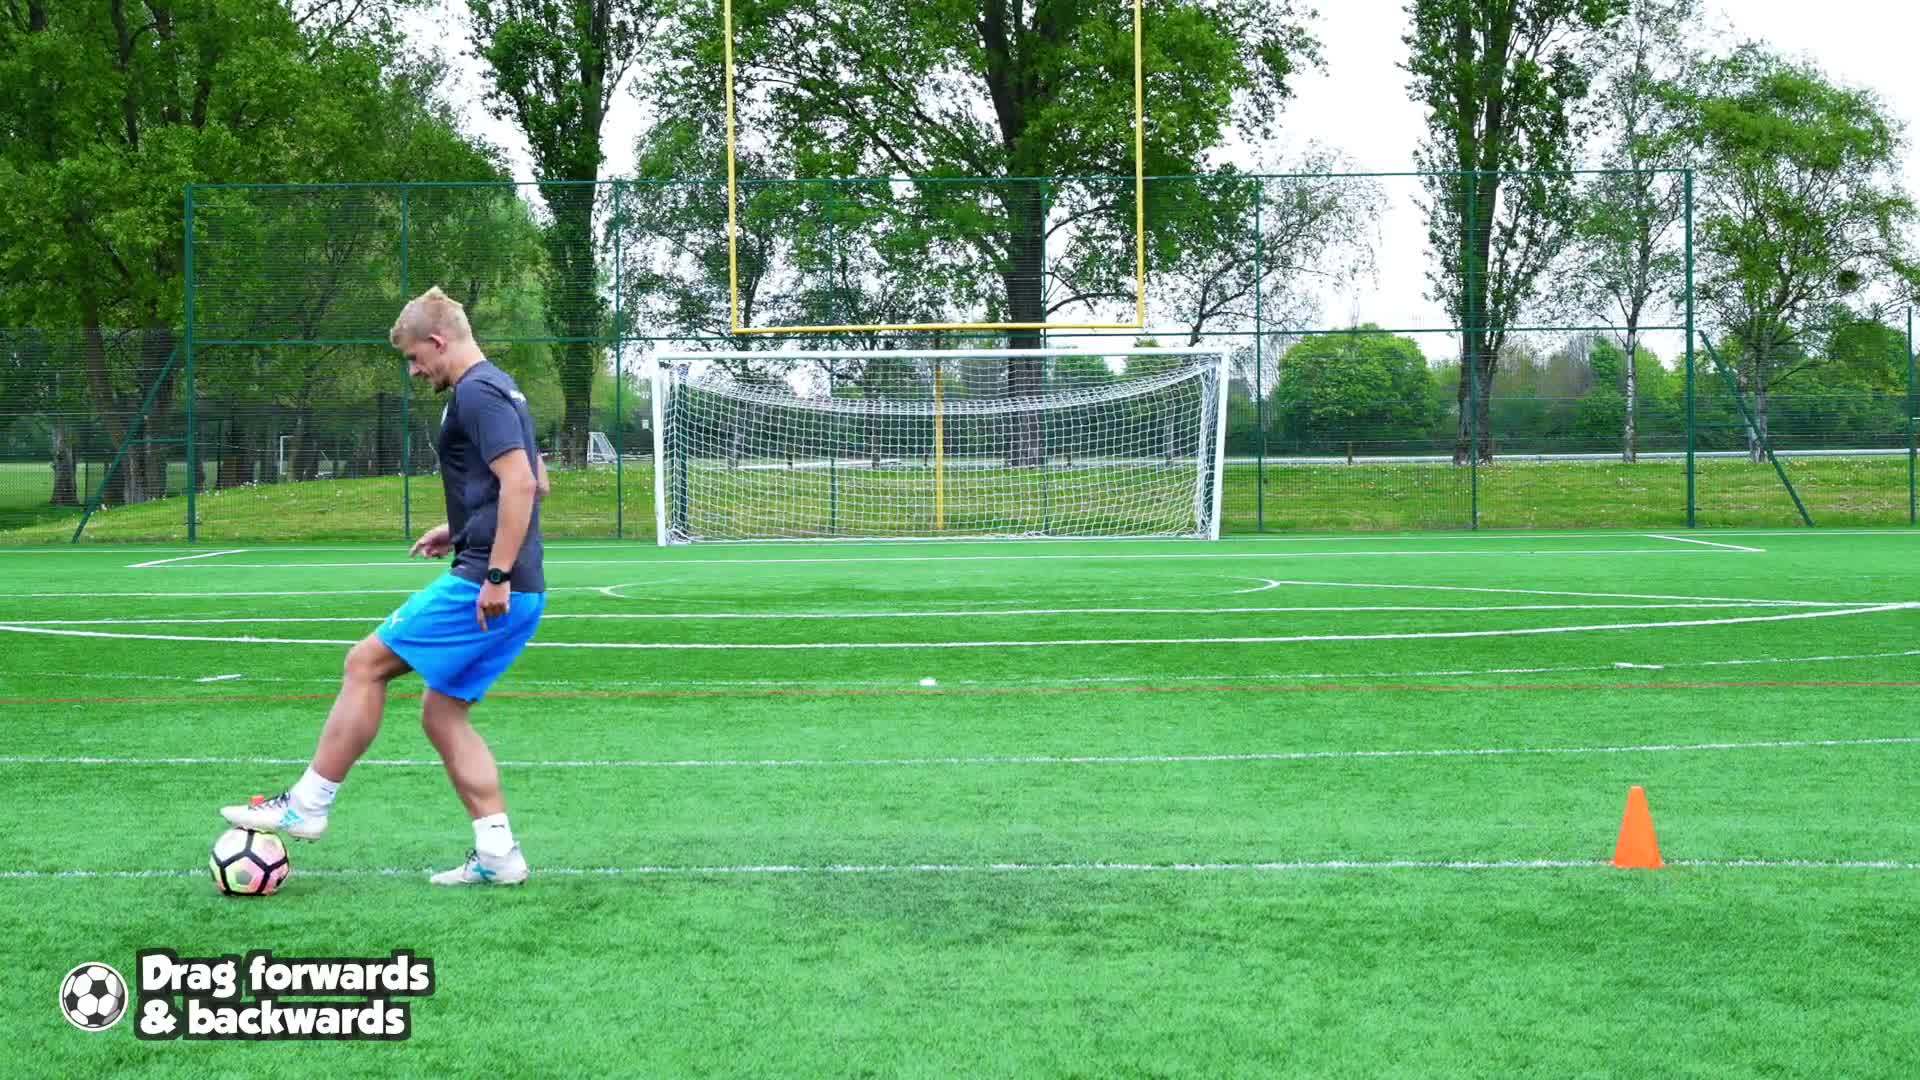 Kicking - (Soccer) Drag forwards & backwards